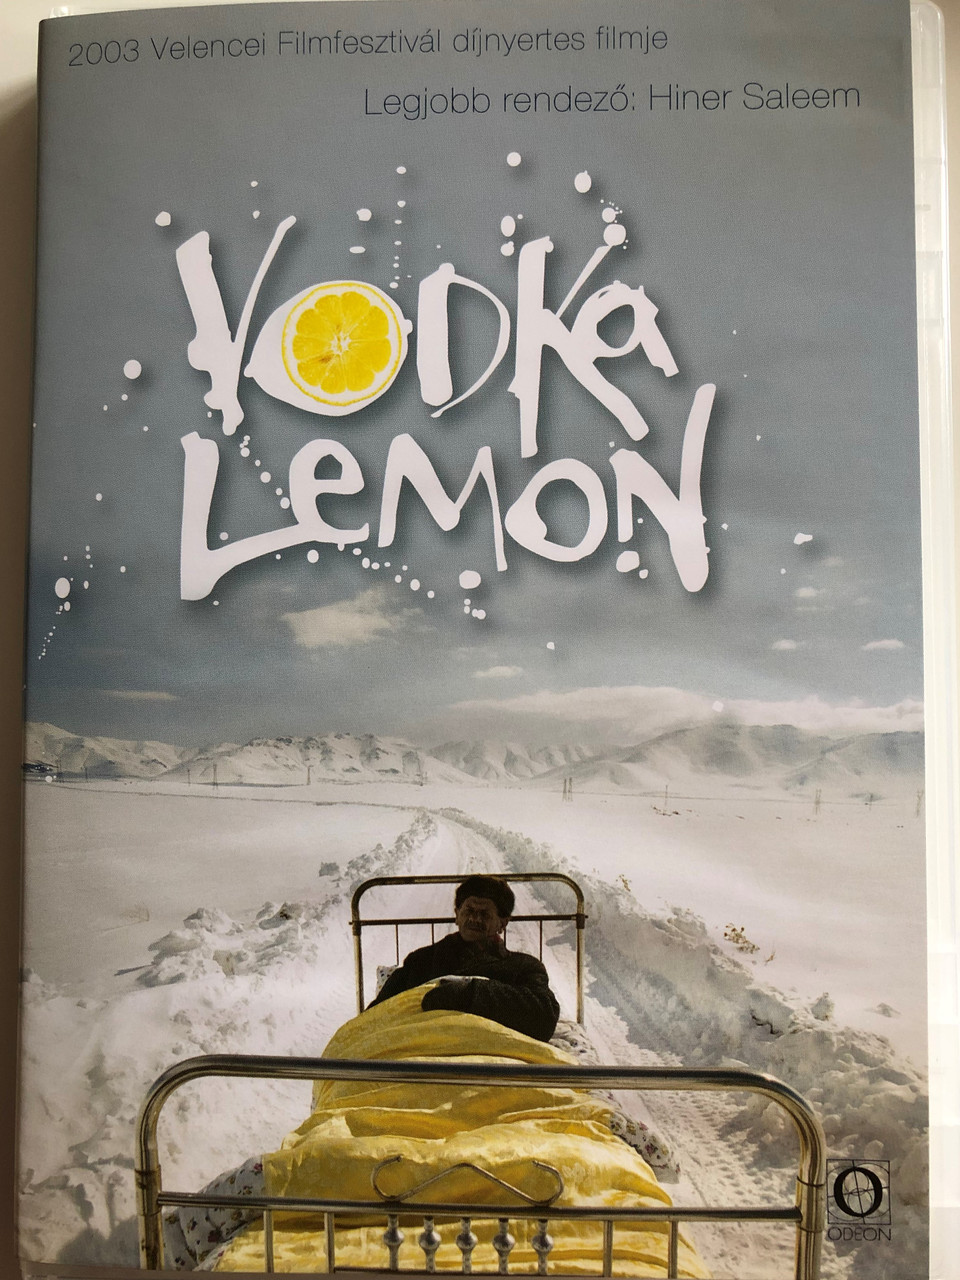 Vodka Lemon DVD 2003 ڤۆدکا لیمۆ / Directed by Hiner Saleem / Starring:  Romen Avinian, Lala Sarkissian / 2003 Venice film festival winner -  bibleinmylanguage